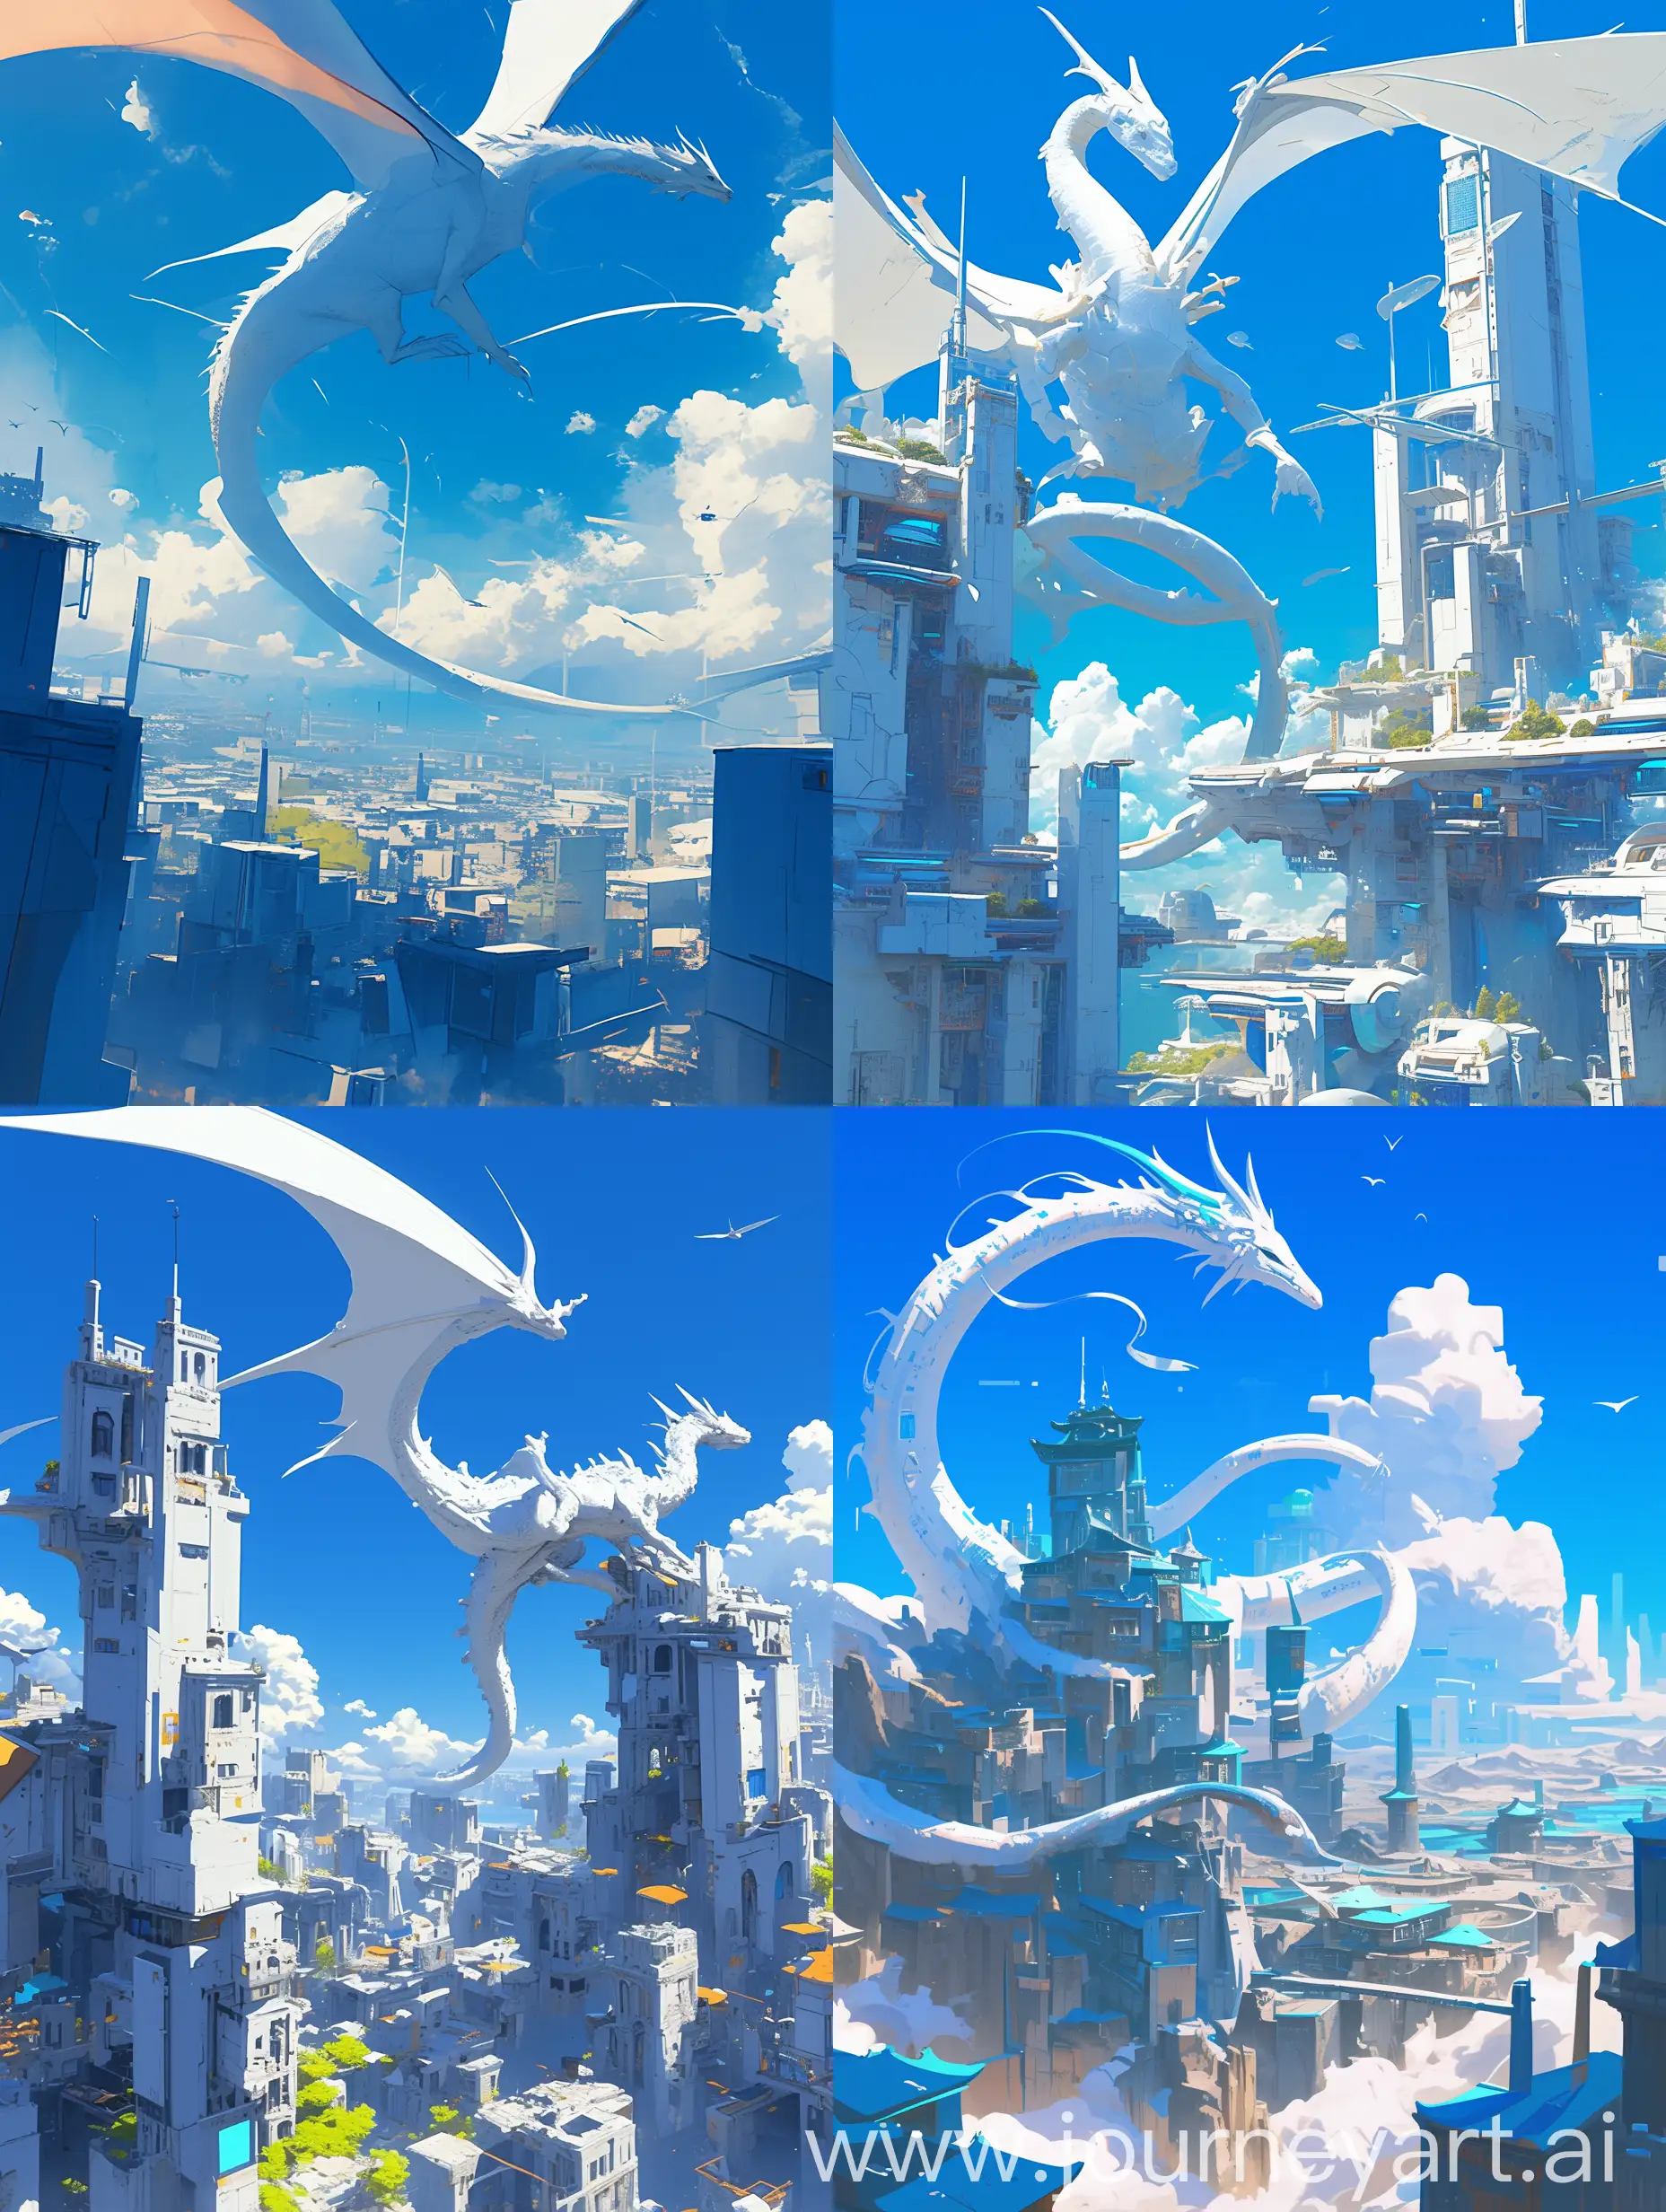 white graceful dragon in the sky, blue sky with minimalistic clouds, super futuristic city with unusual design from the bottom, super bright colors and minimalistic semi-cartoon --niji 6